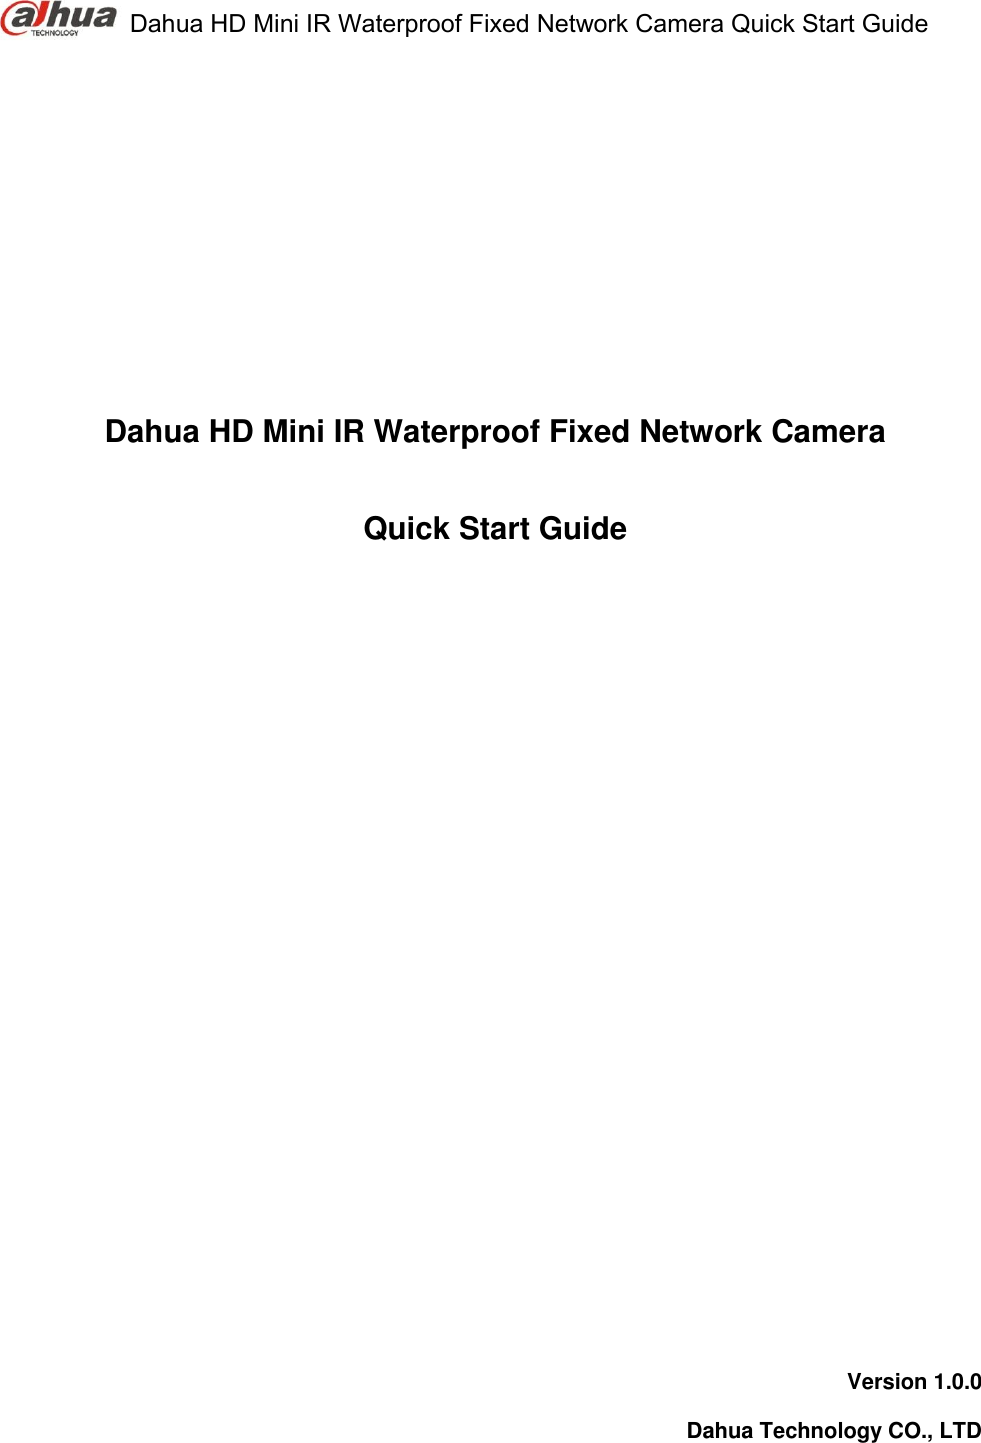  Dahua HD Mini IR Waterproof Fixed Network Camera Quick Start Guide        Dahua HD Mini IR Waterproof Fixed Network Camera  Quick Start Guide                     Version 1.0.0 Dahua Technology CO., LTD  